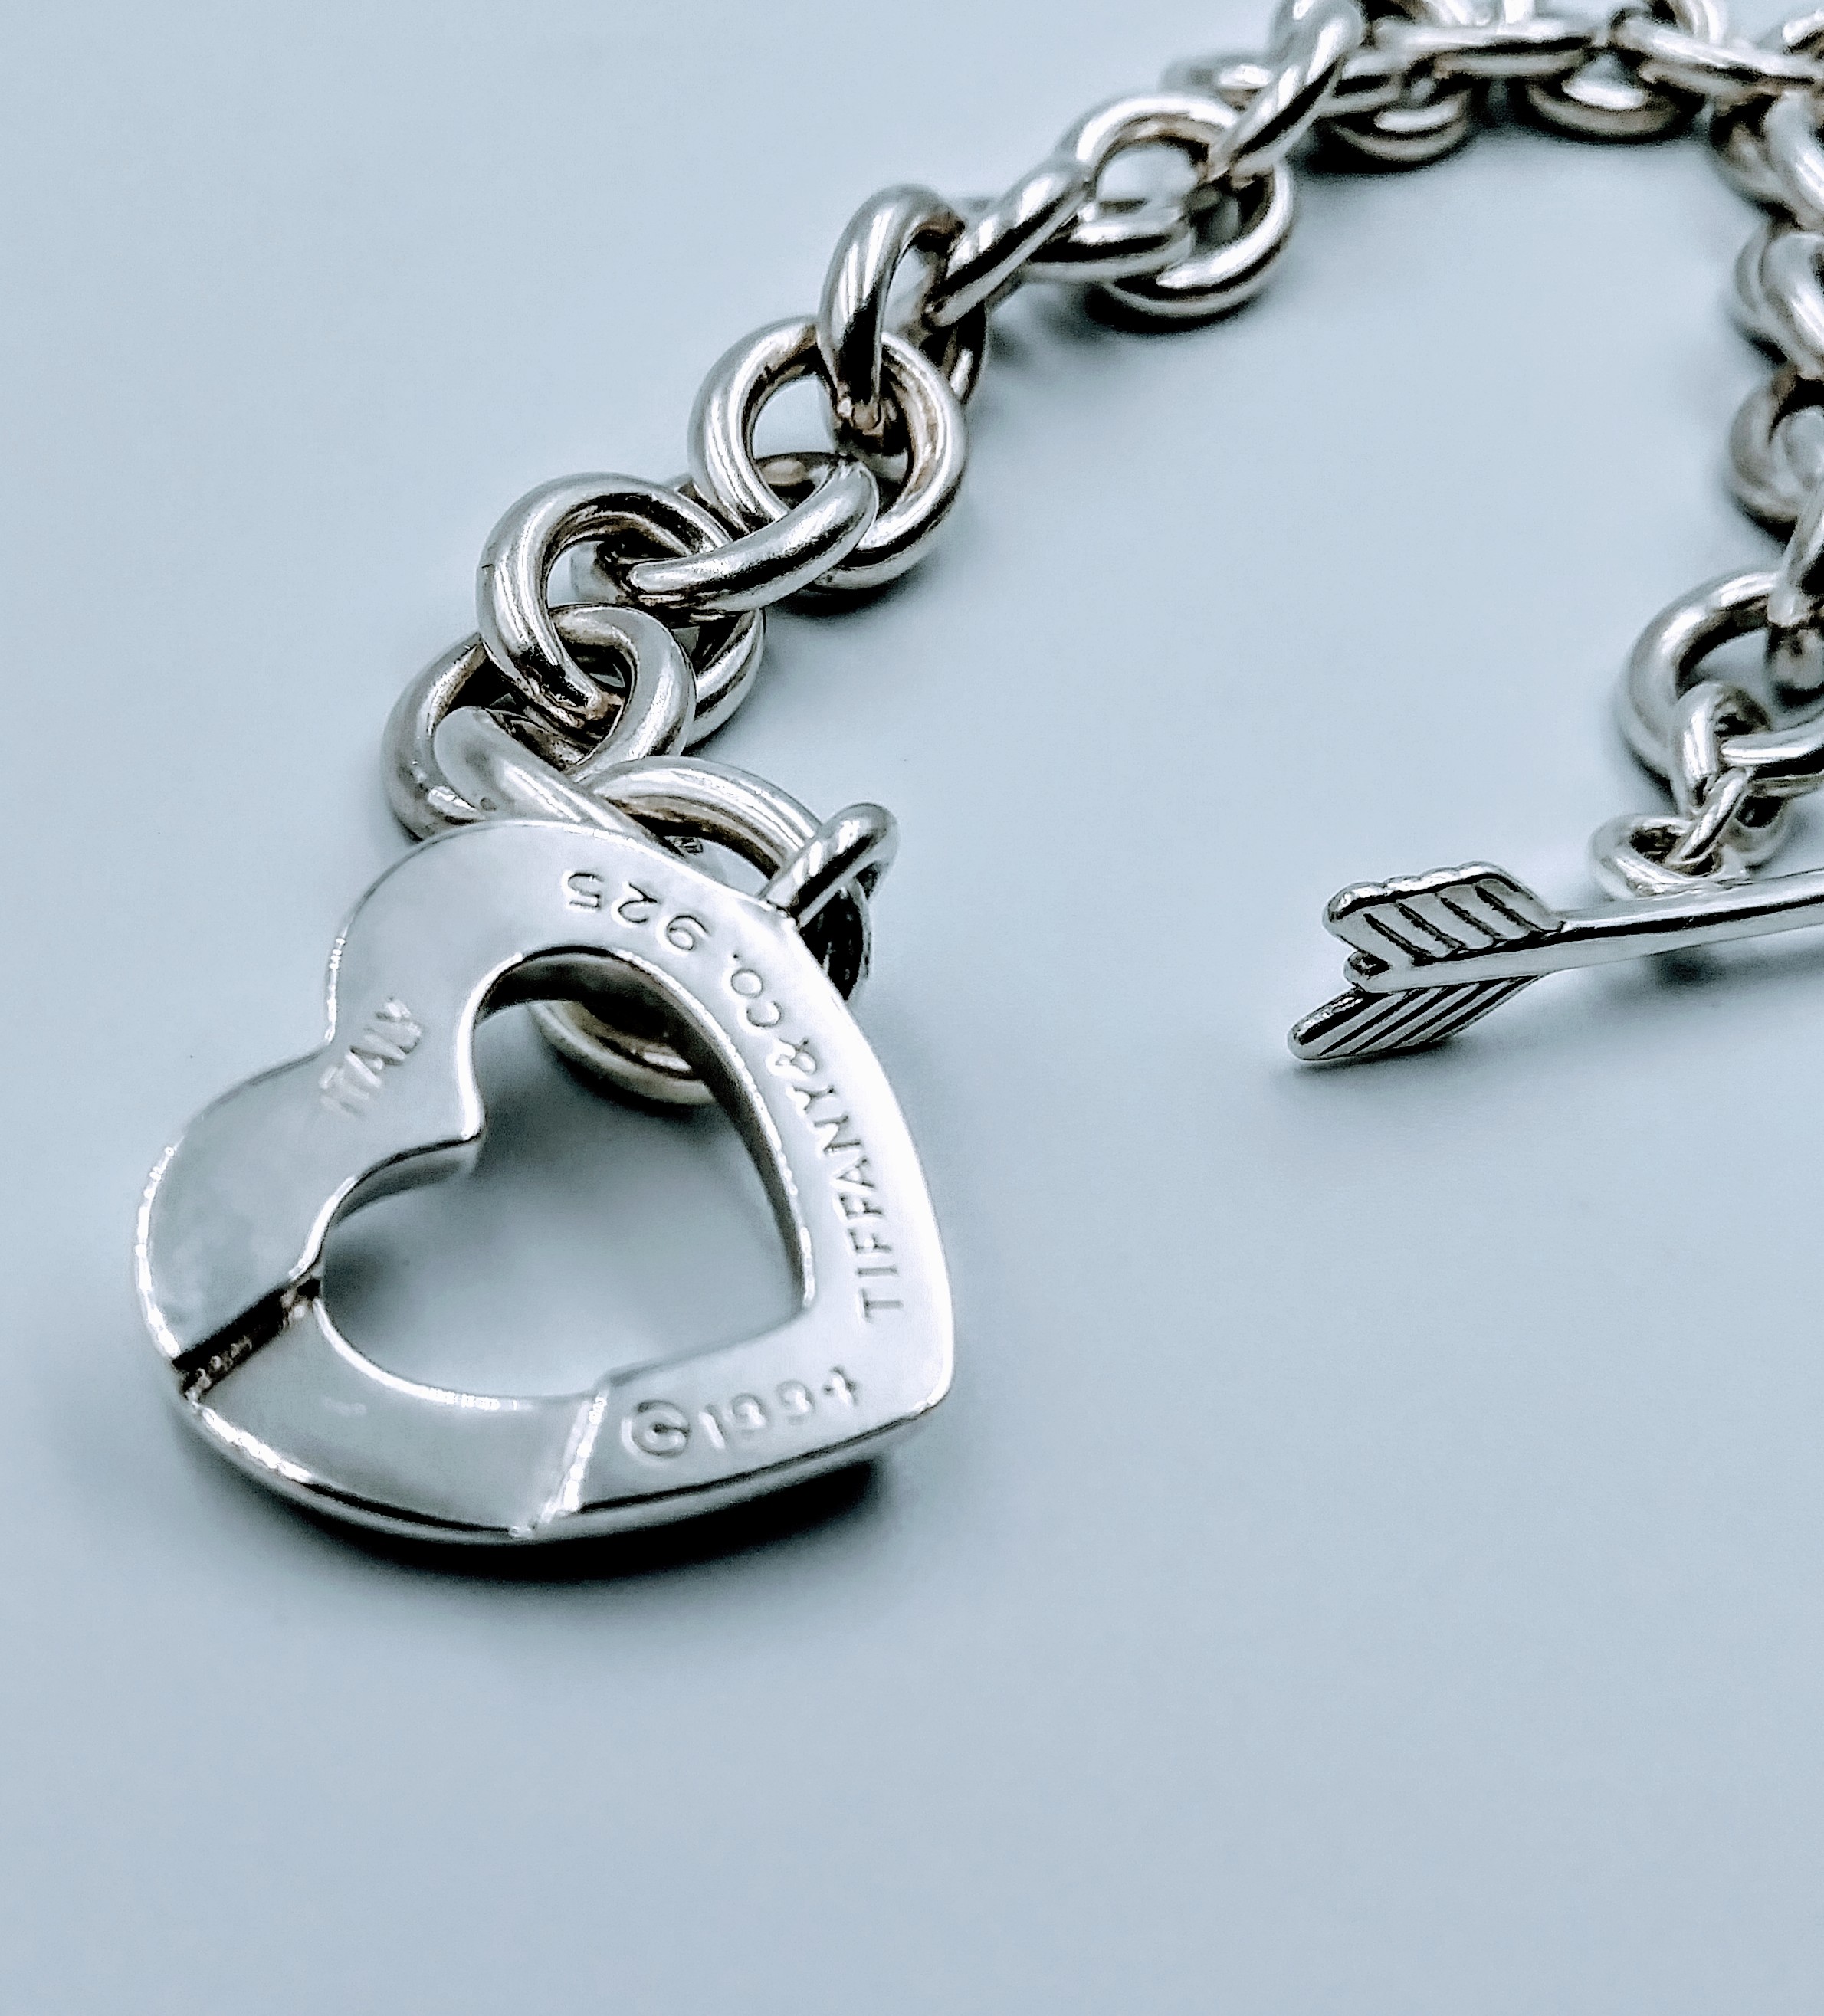 1994 Tiffany & Co Heart Key Necklace Vintage Sterling Silver 18k